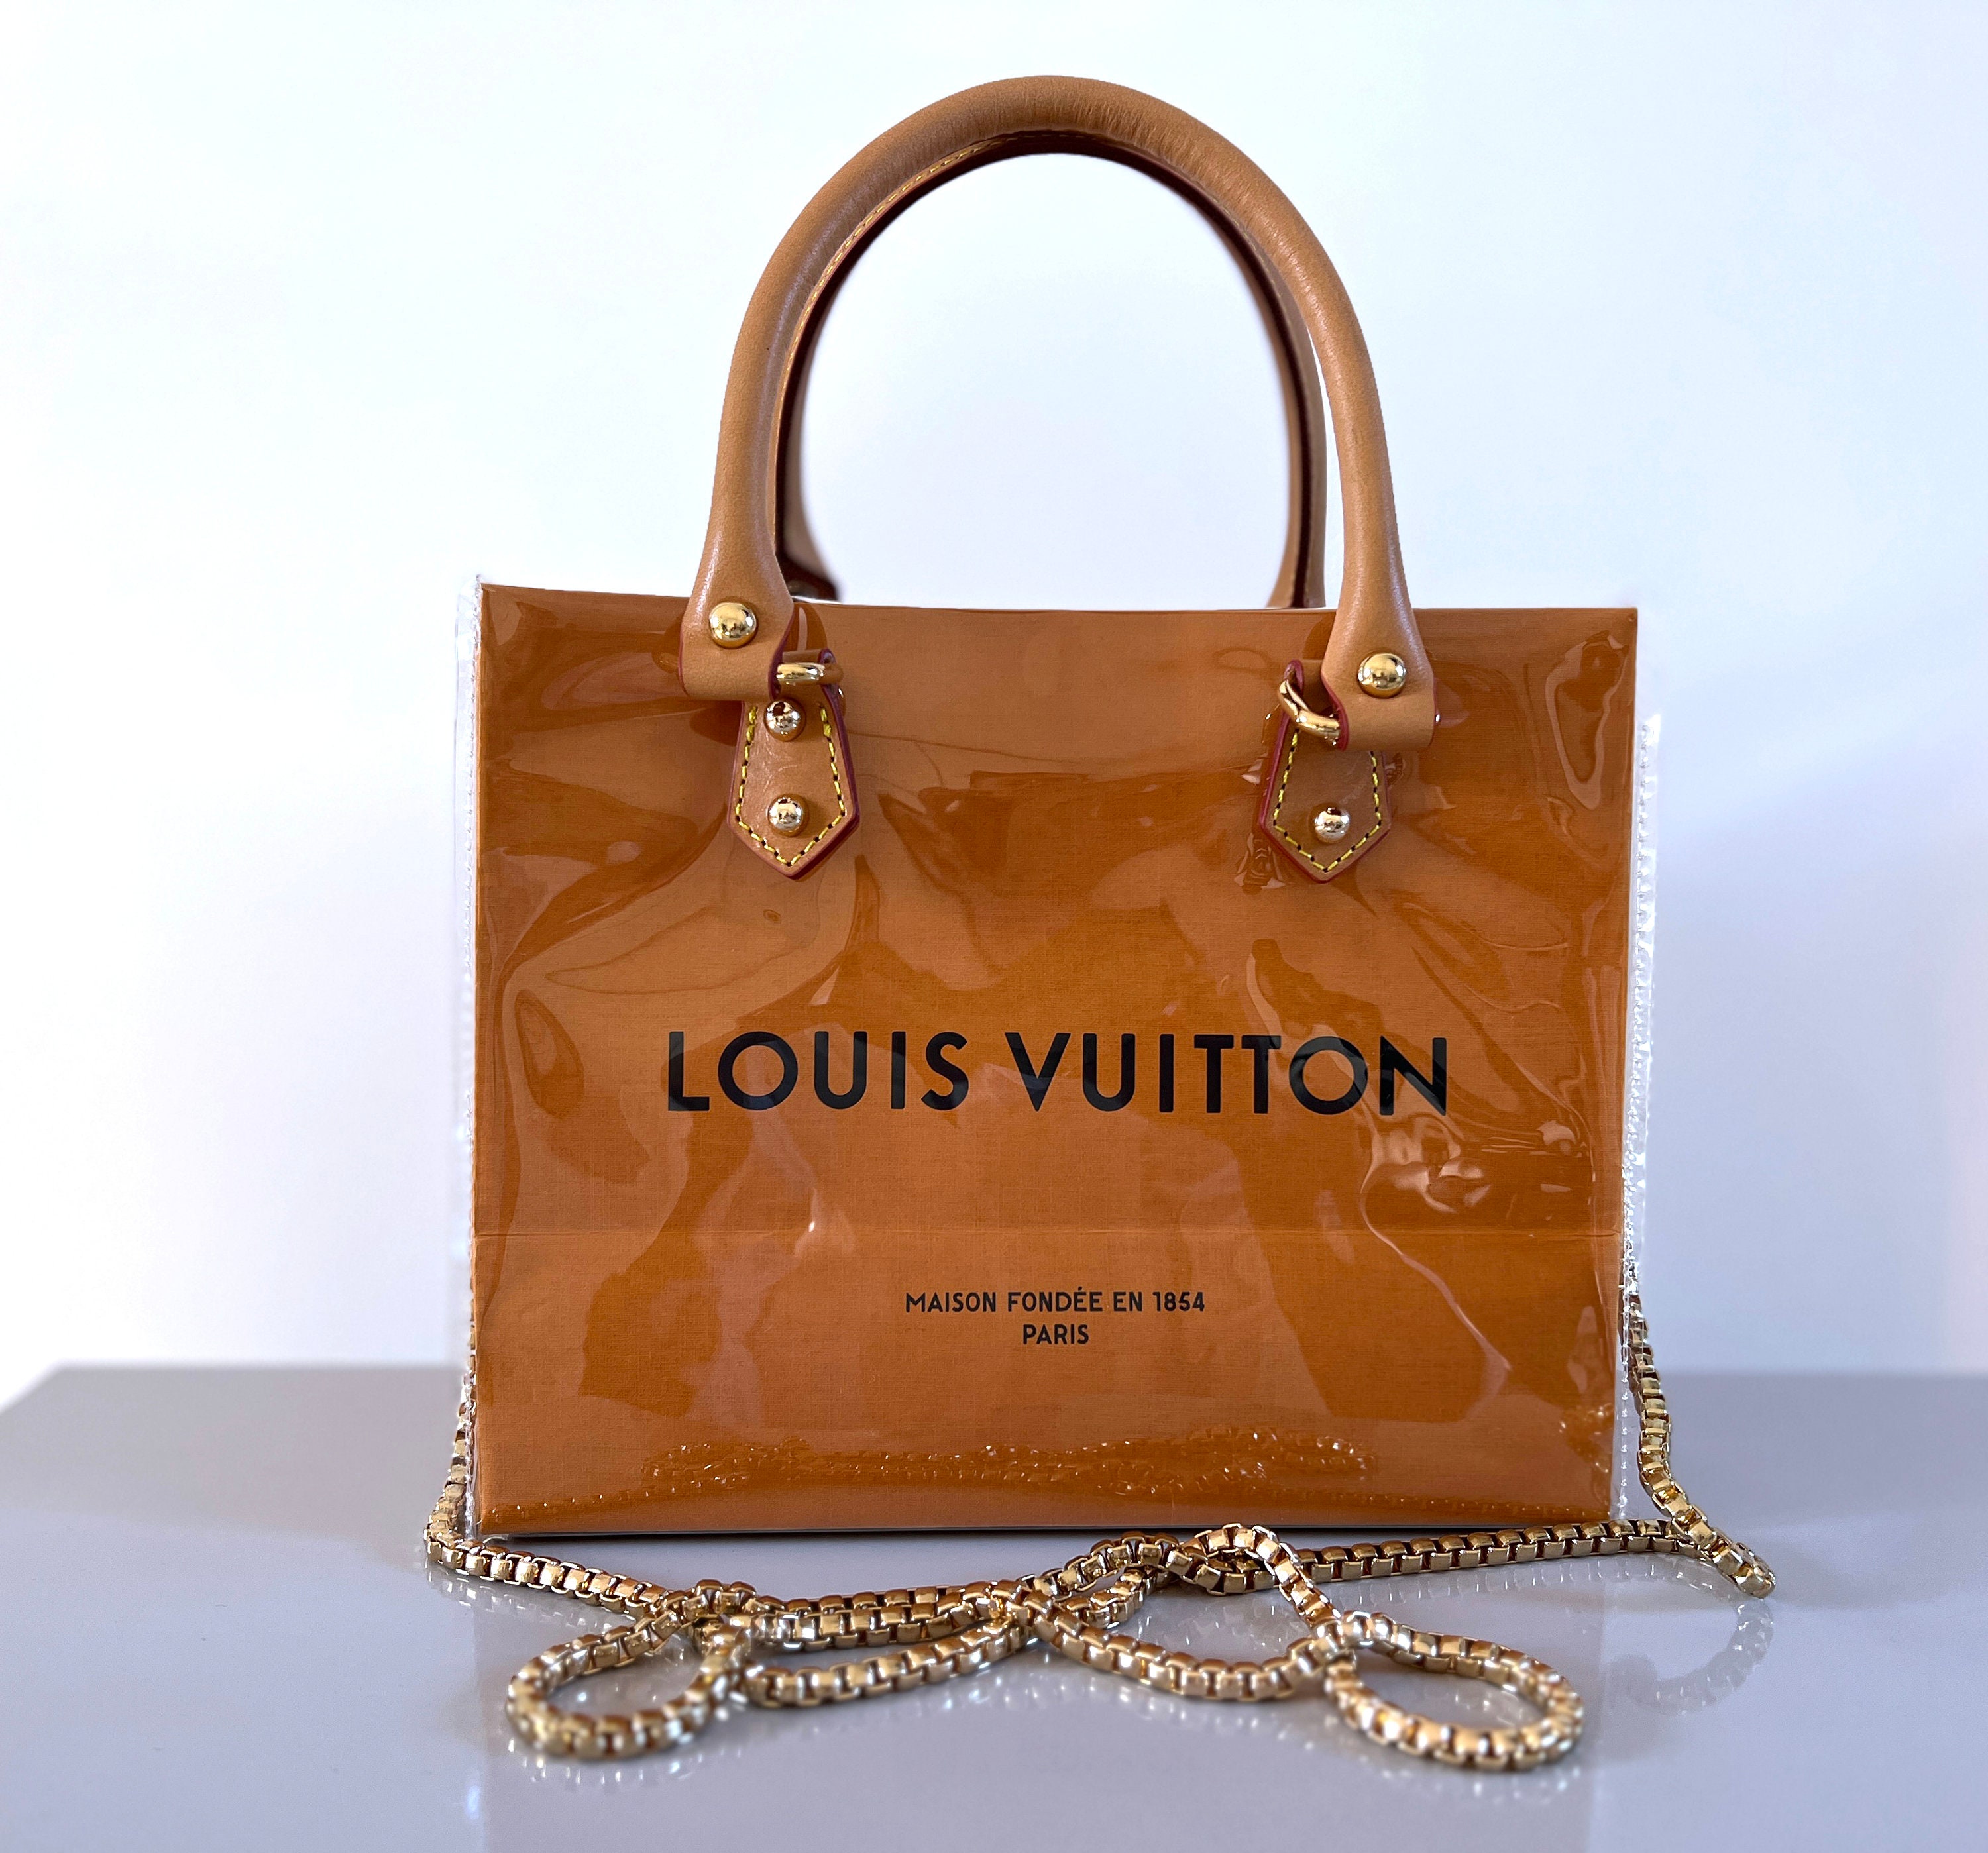 Louis Vuitton: Free Printable Paper Purses  Louis vuitton birthday party,  Louis vuitton gifts, Paper purse